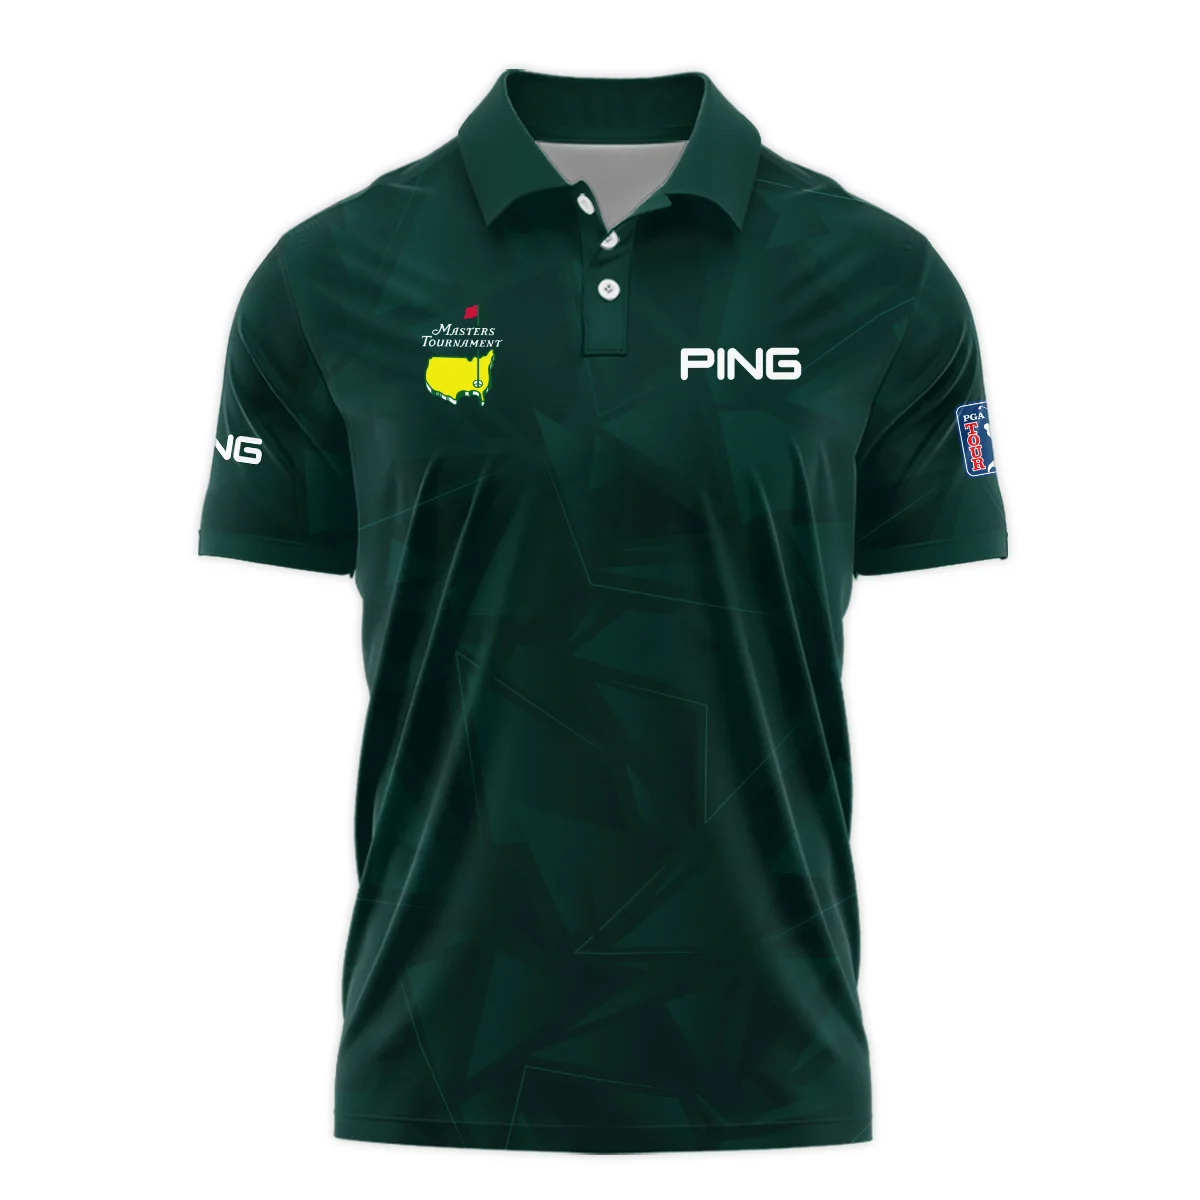 Dark Green Abstract Sport Masters Tournament Ping Hoodie Shirt Style Classic Hoodie Shirt